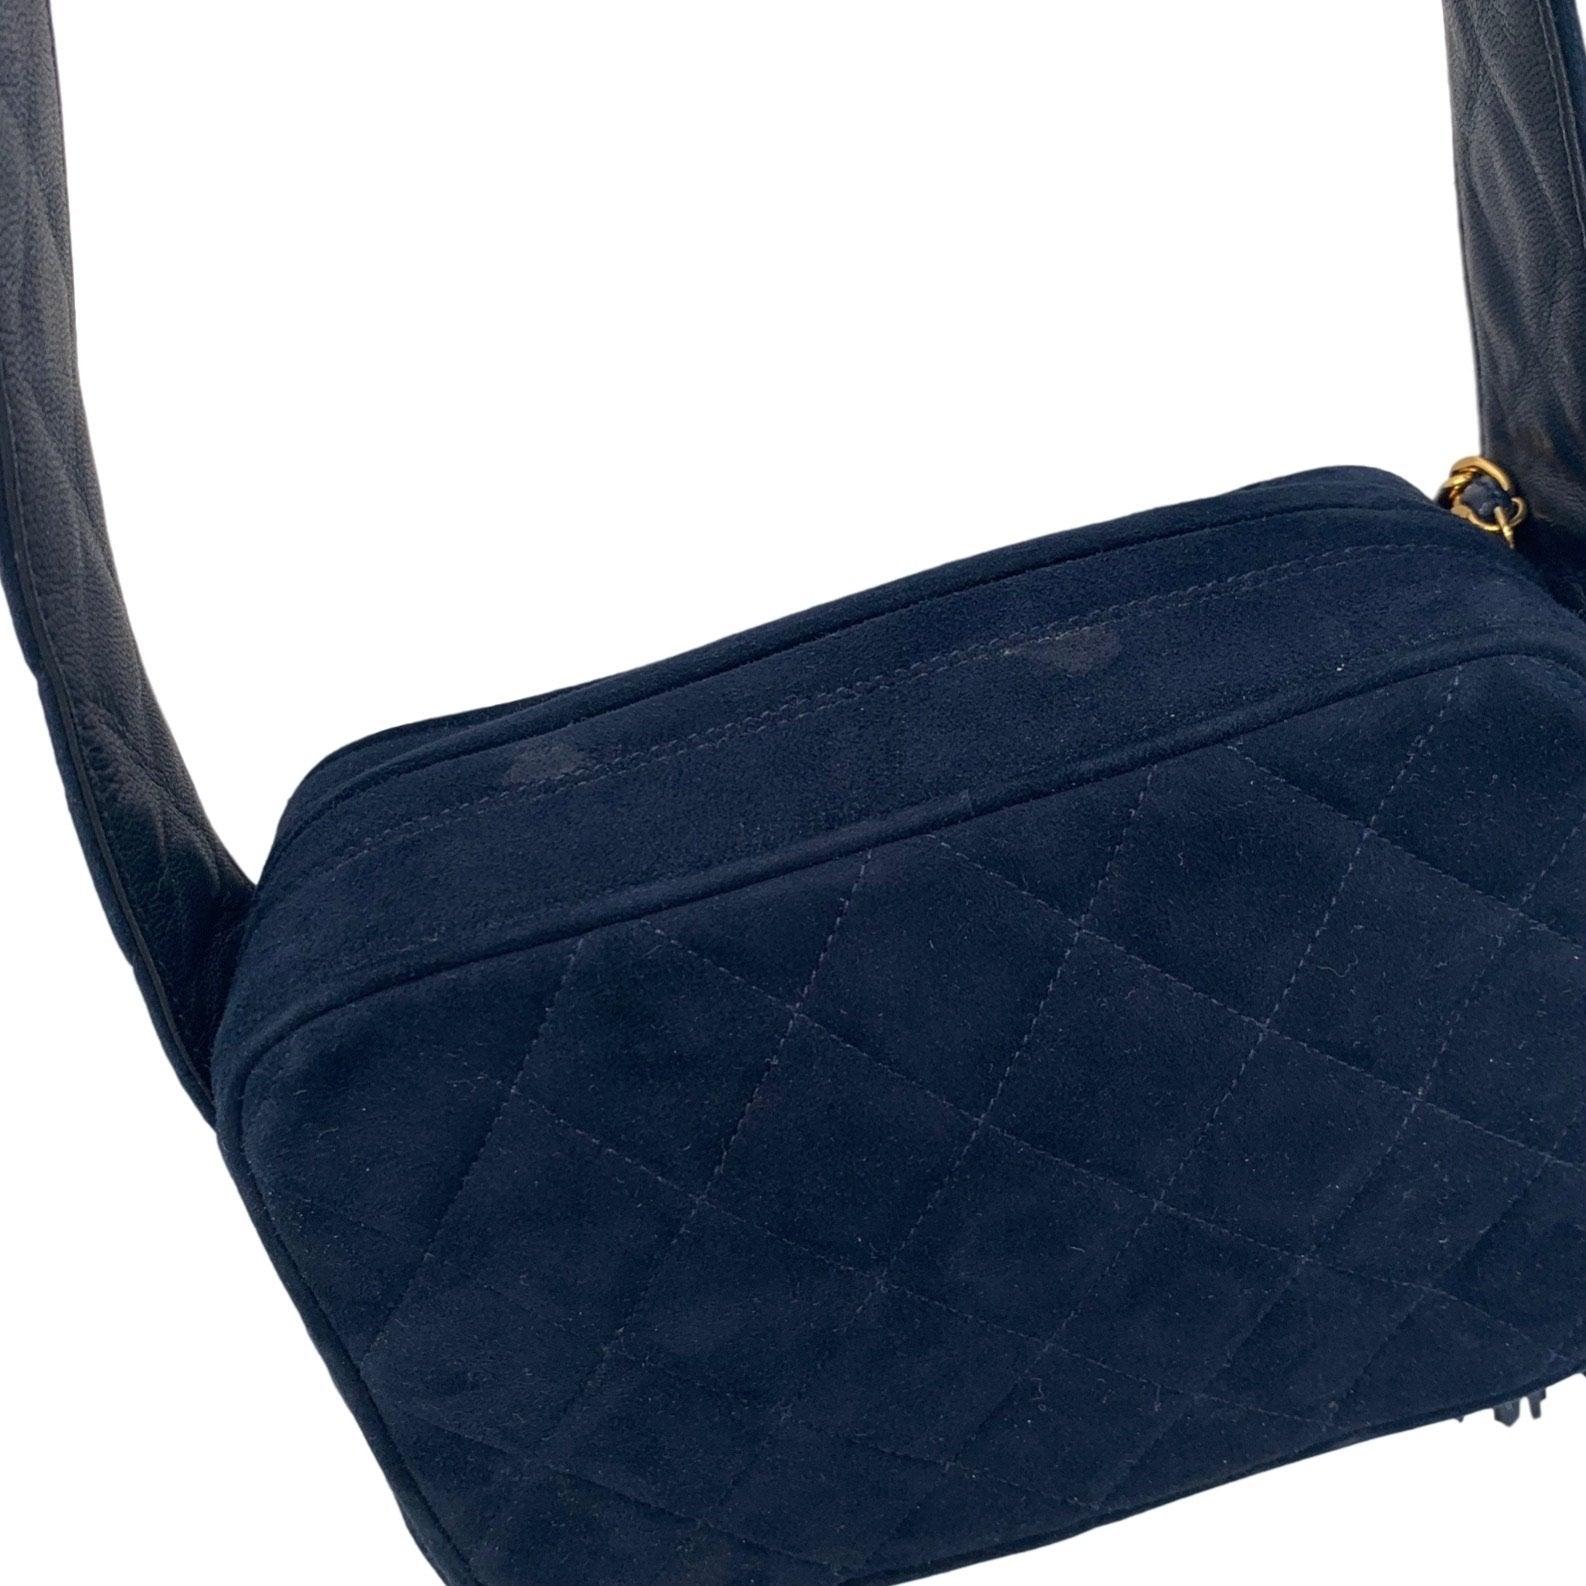 Chanel Navy Suede Tassel Logo Camera Bag - Handbags